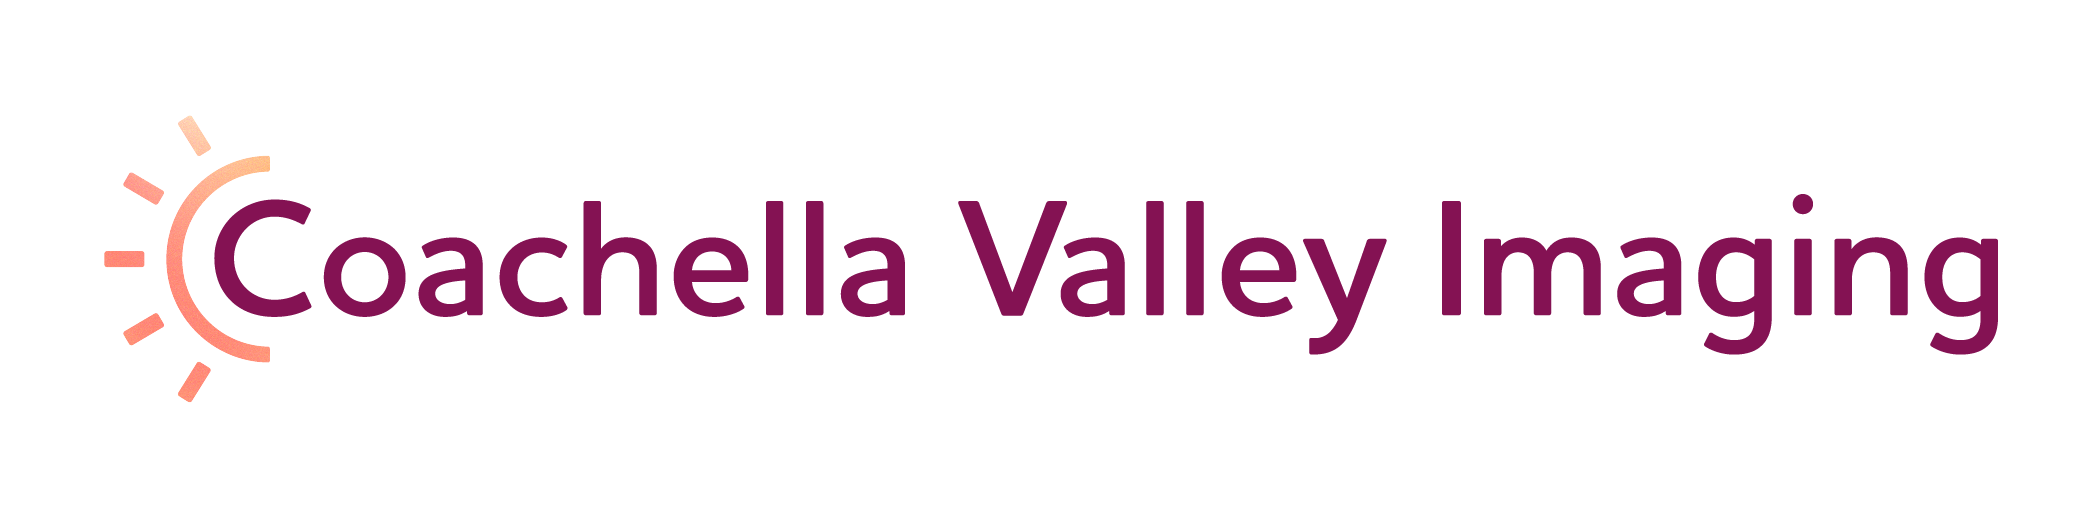 Coachella Valley Imaging Logo